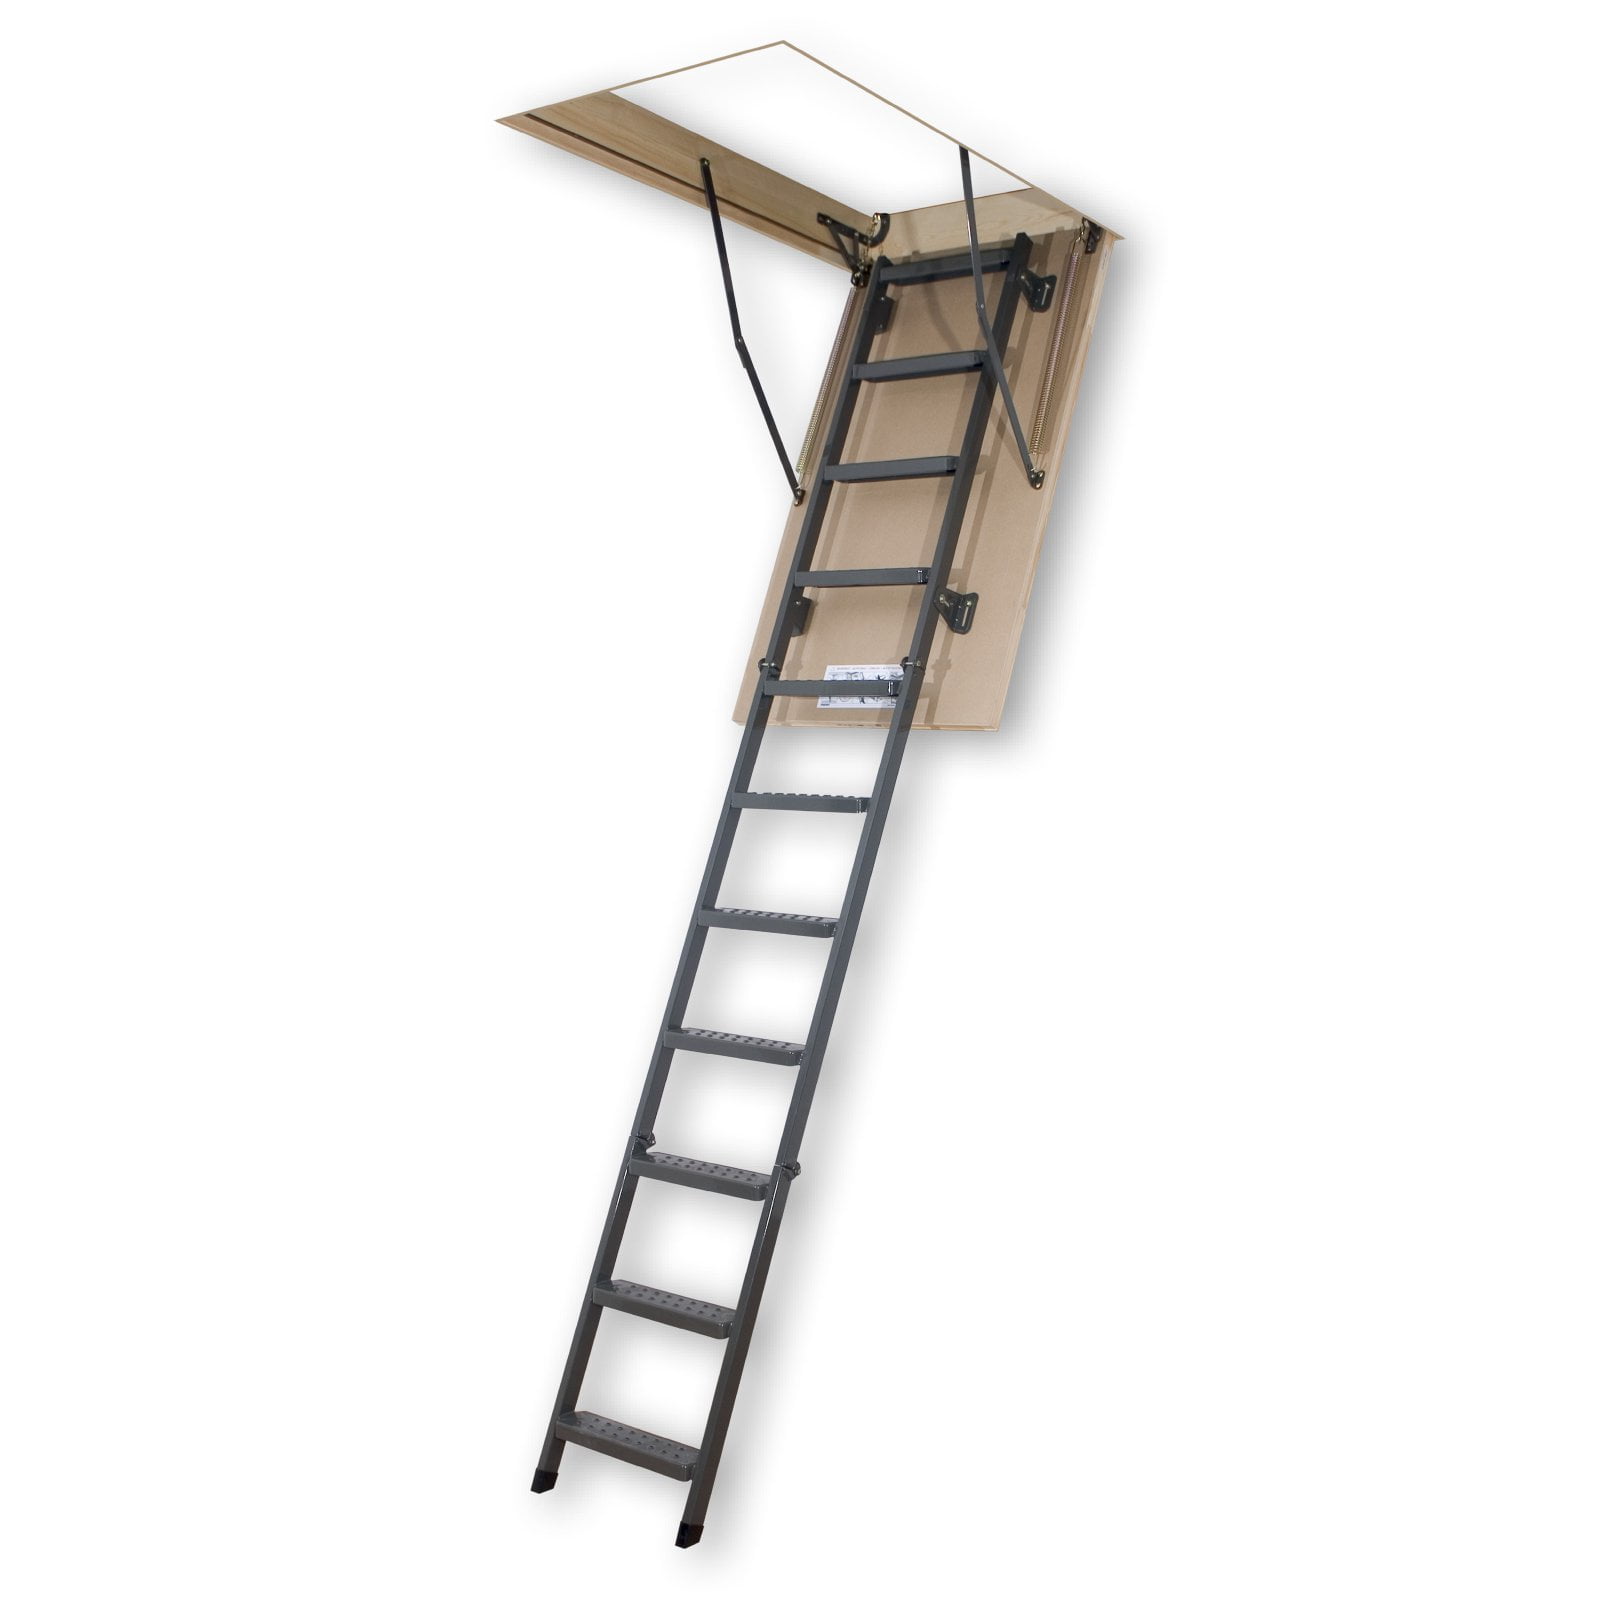 FAKRO LMS 66865 Insulated Metal Folding Attic Ladder 22x47